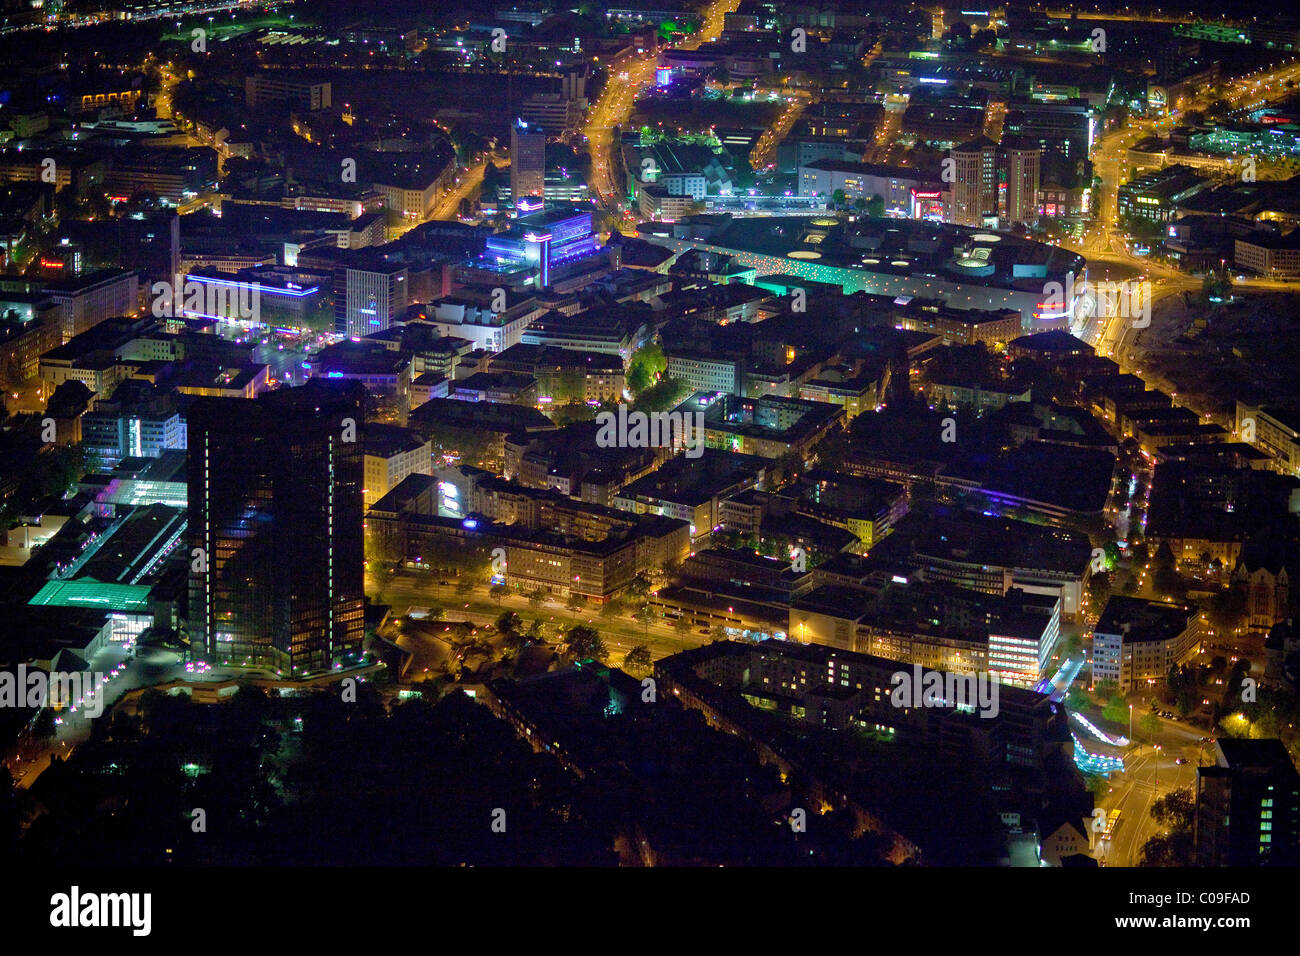 Aerial view, night shot, EVAG tram depot, Essen, Ruhrgebiet region, North Rhine-Westphalia, Germany, Europe Stock Photo